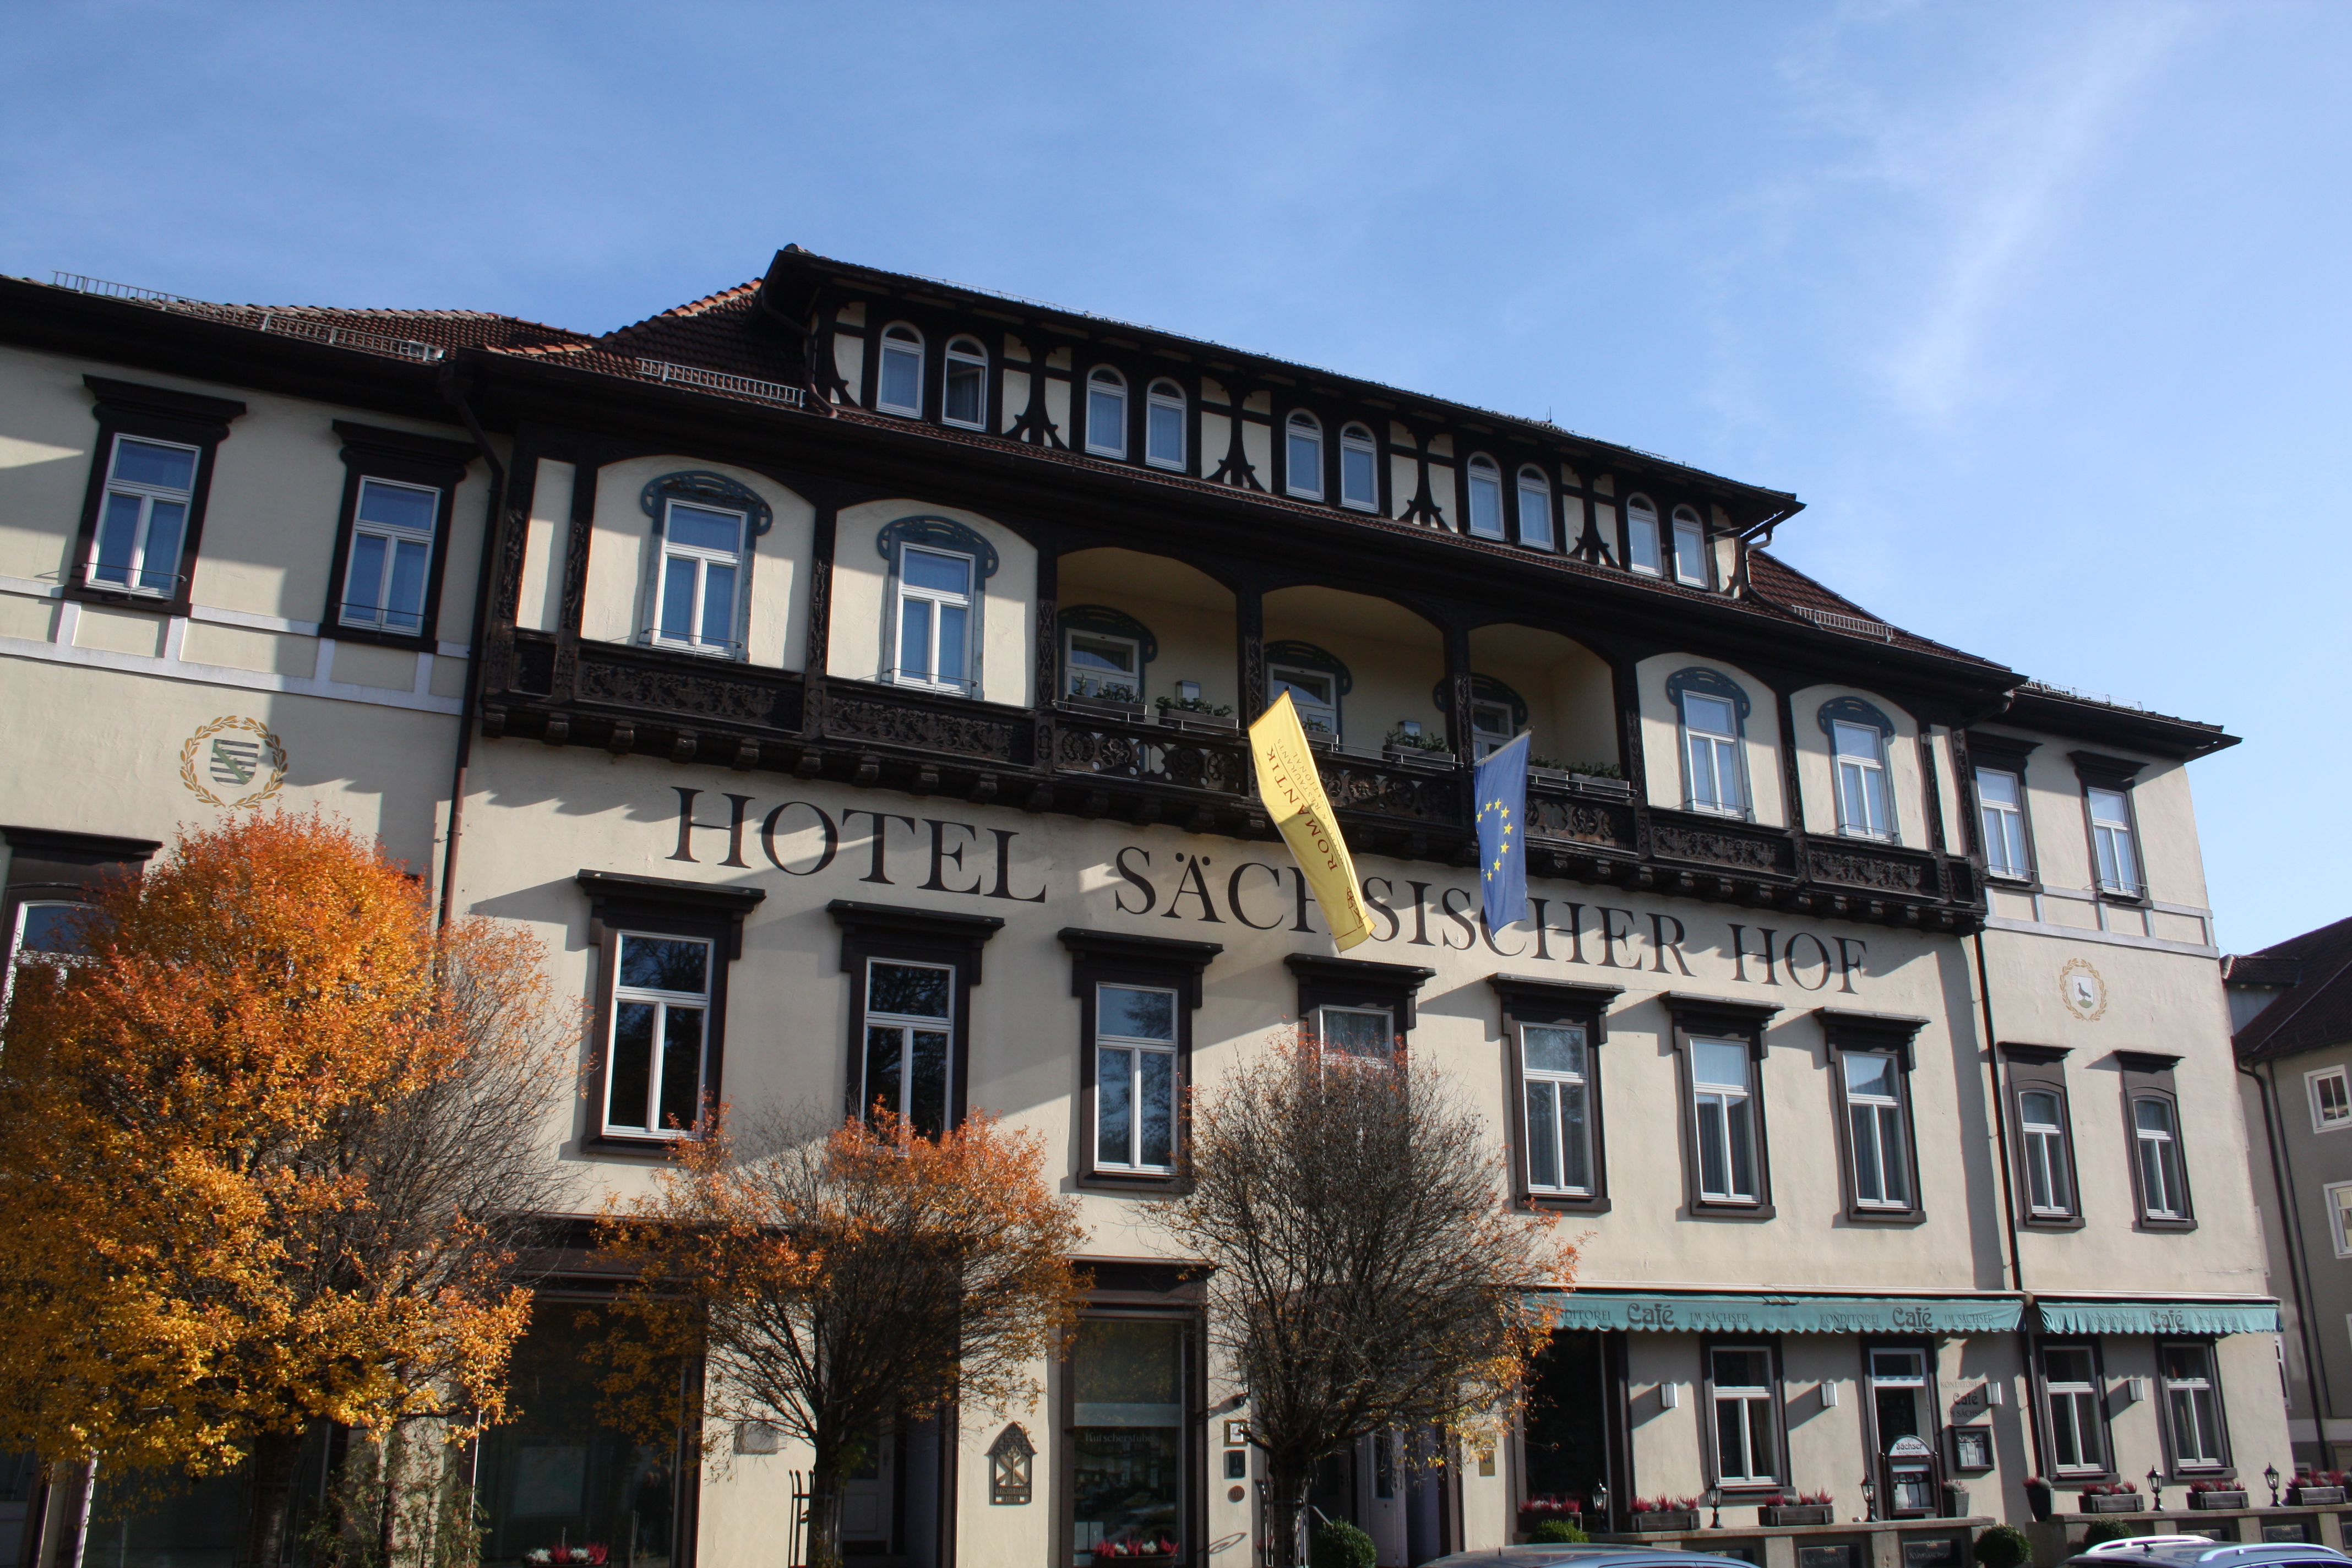 Hotel Sächsischer Hof, Meiningen.
